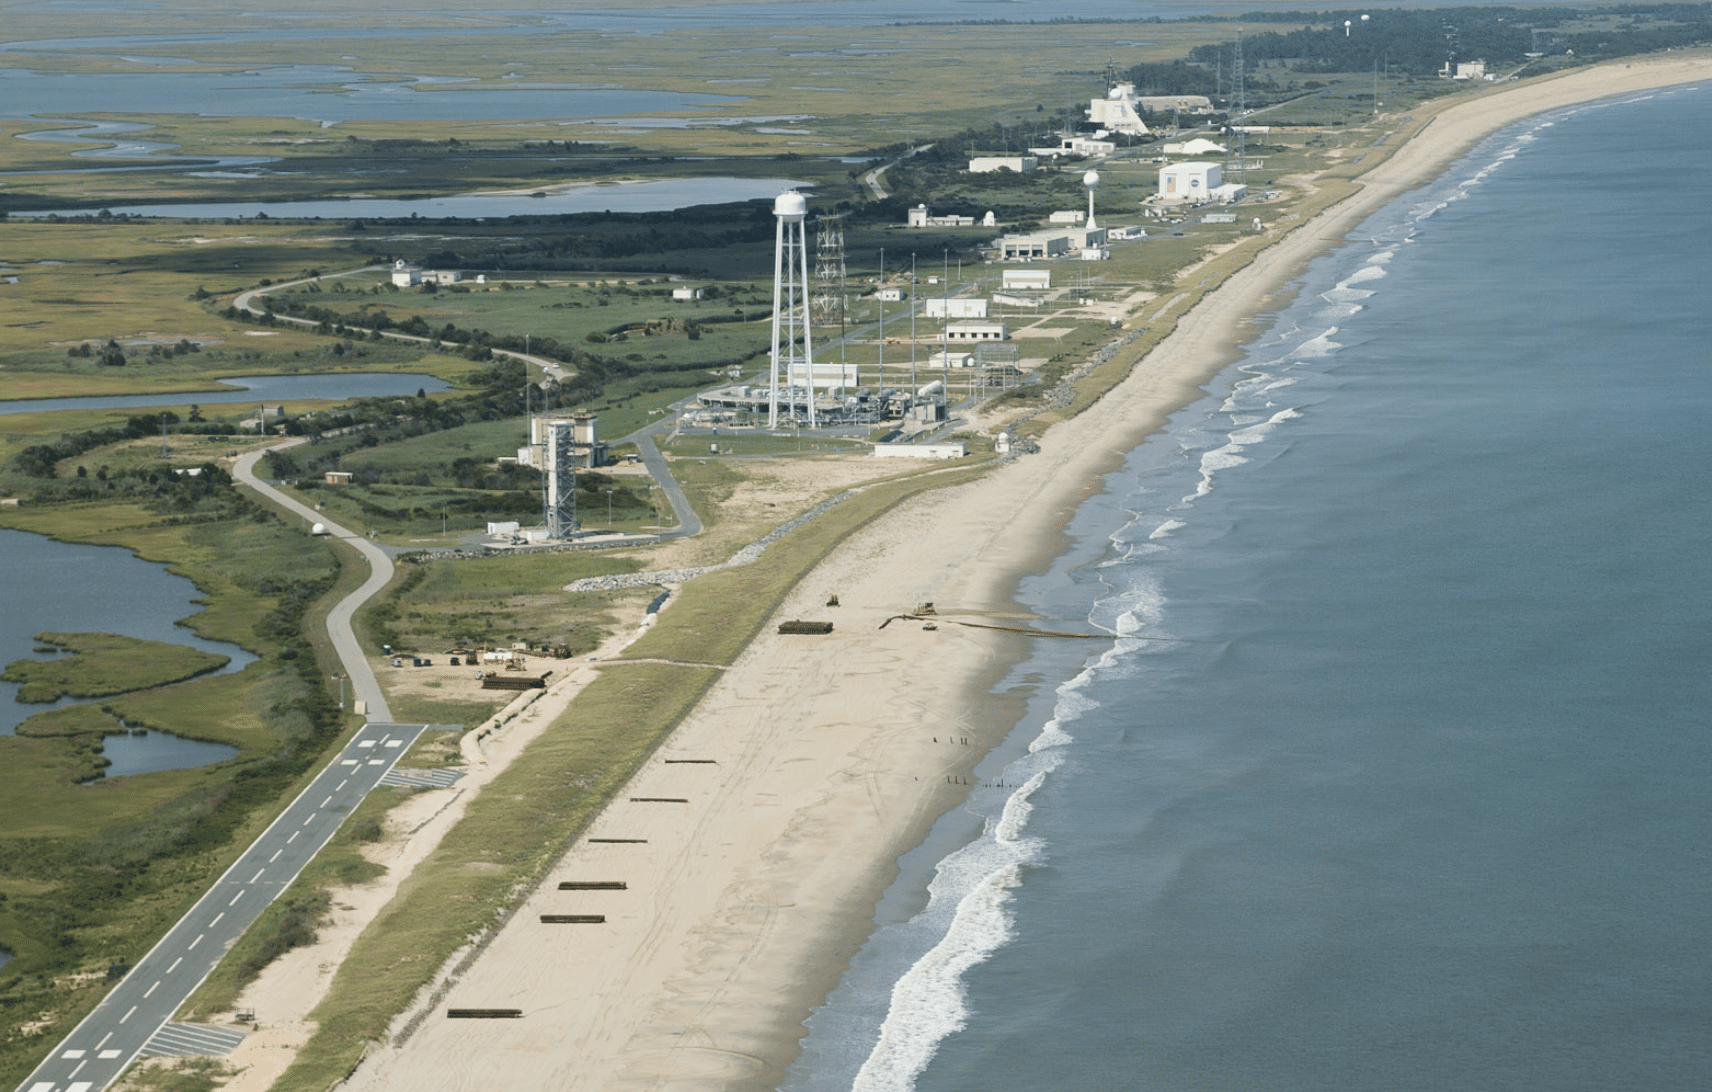 Wallops Island NASA facility off the Eastern Shore of Virginia.